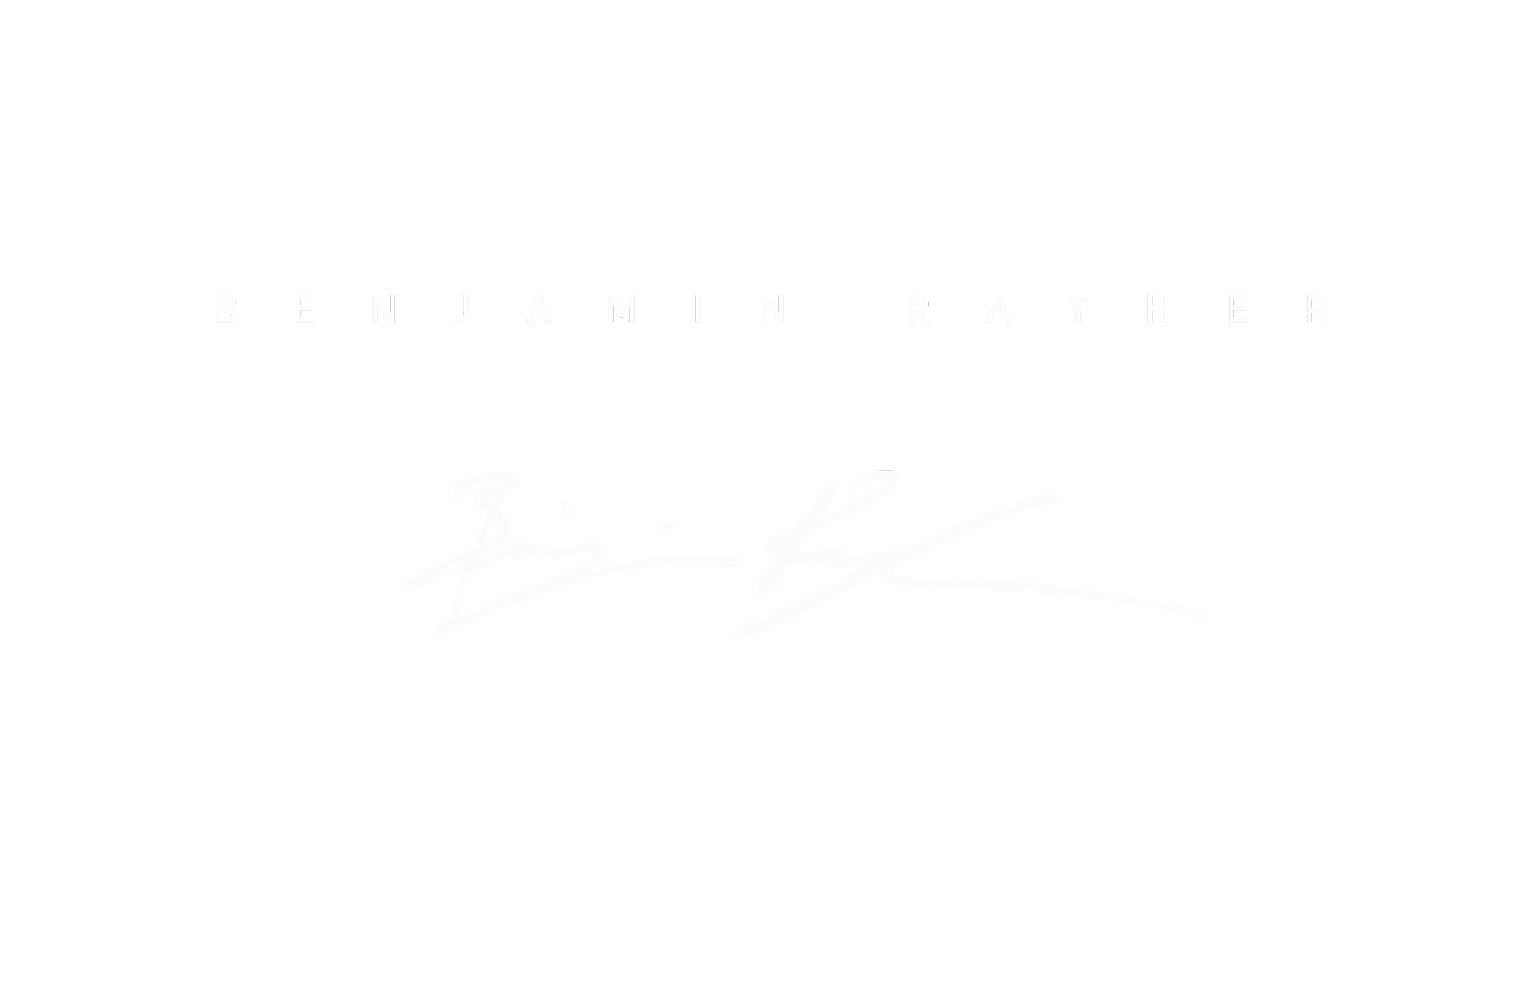 Rayher Arts - Benjamin Rayher - Signature